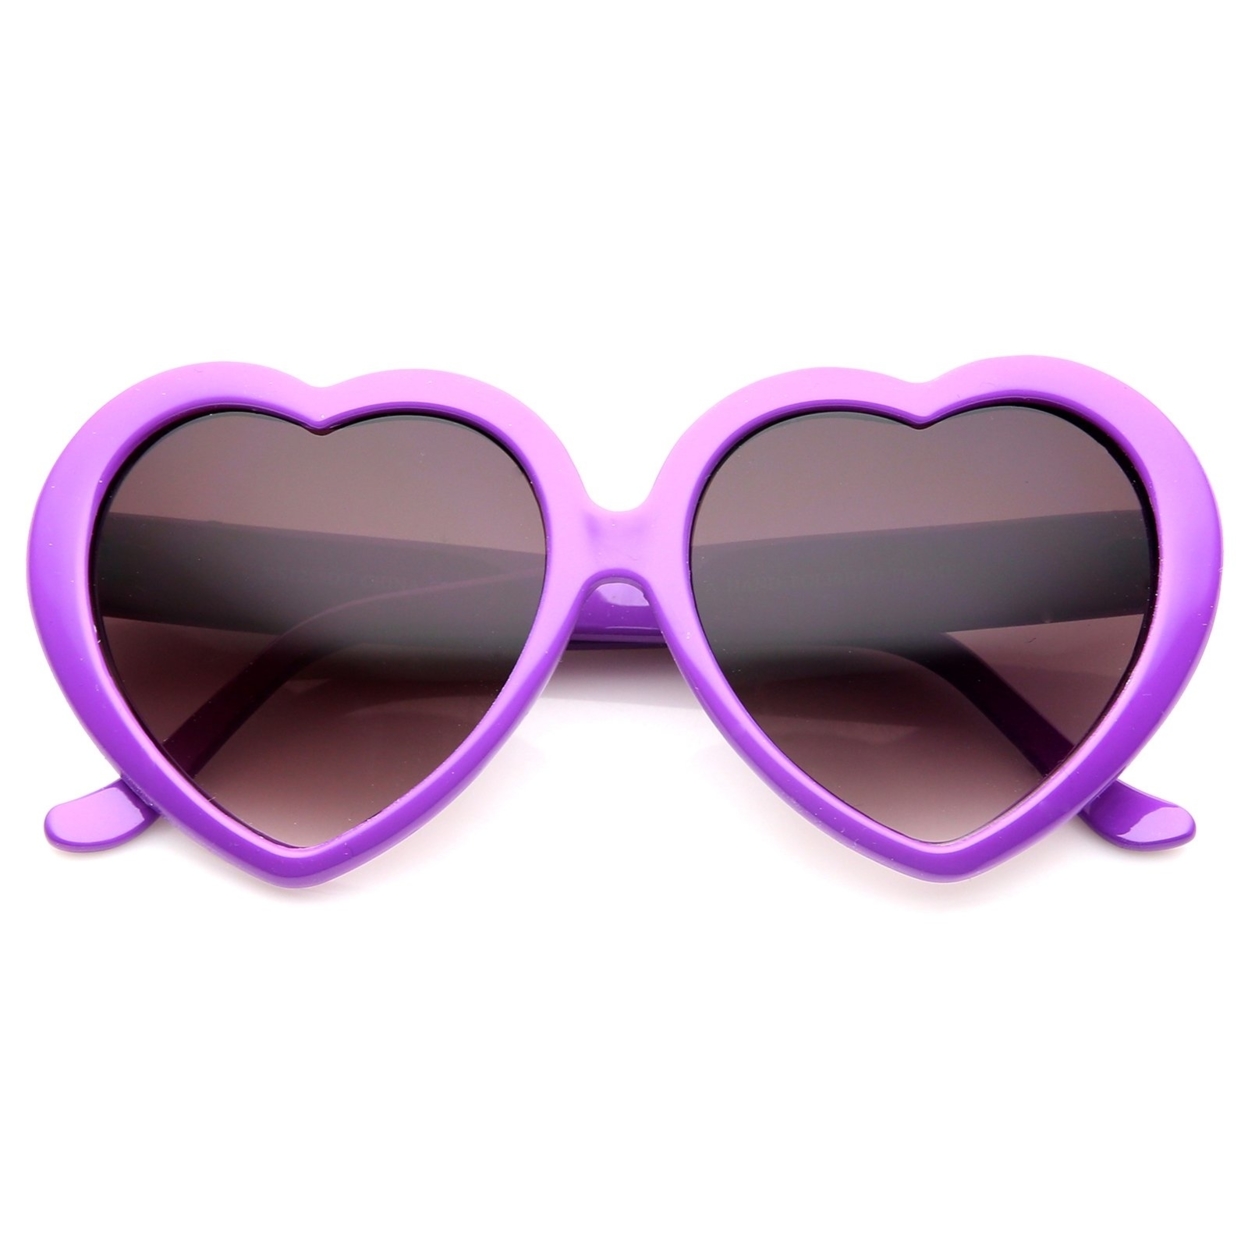 Women's Oversize Neutral-Colored Lens Heart Shaped Sunglasses 55mm - Black / Lavender